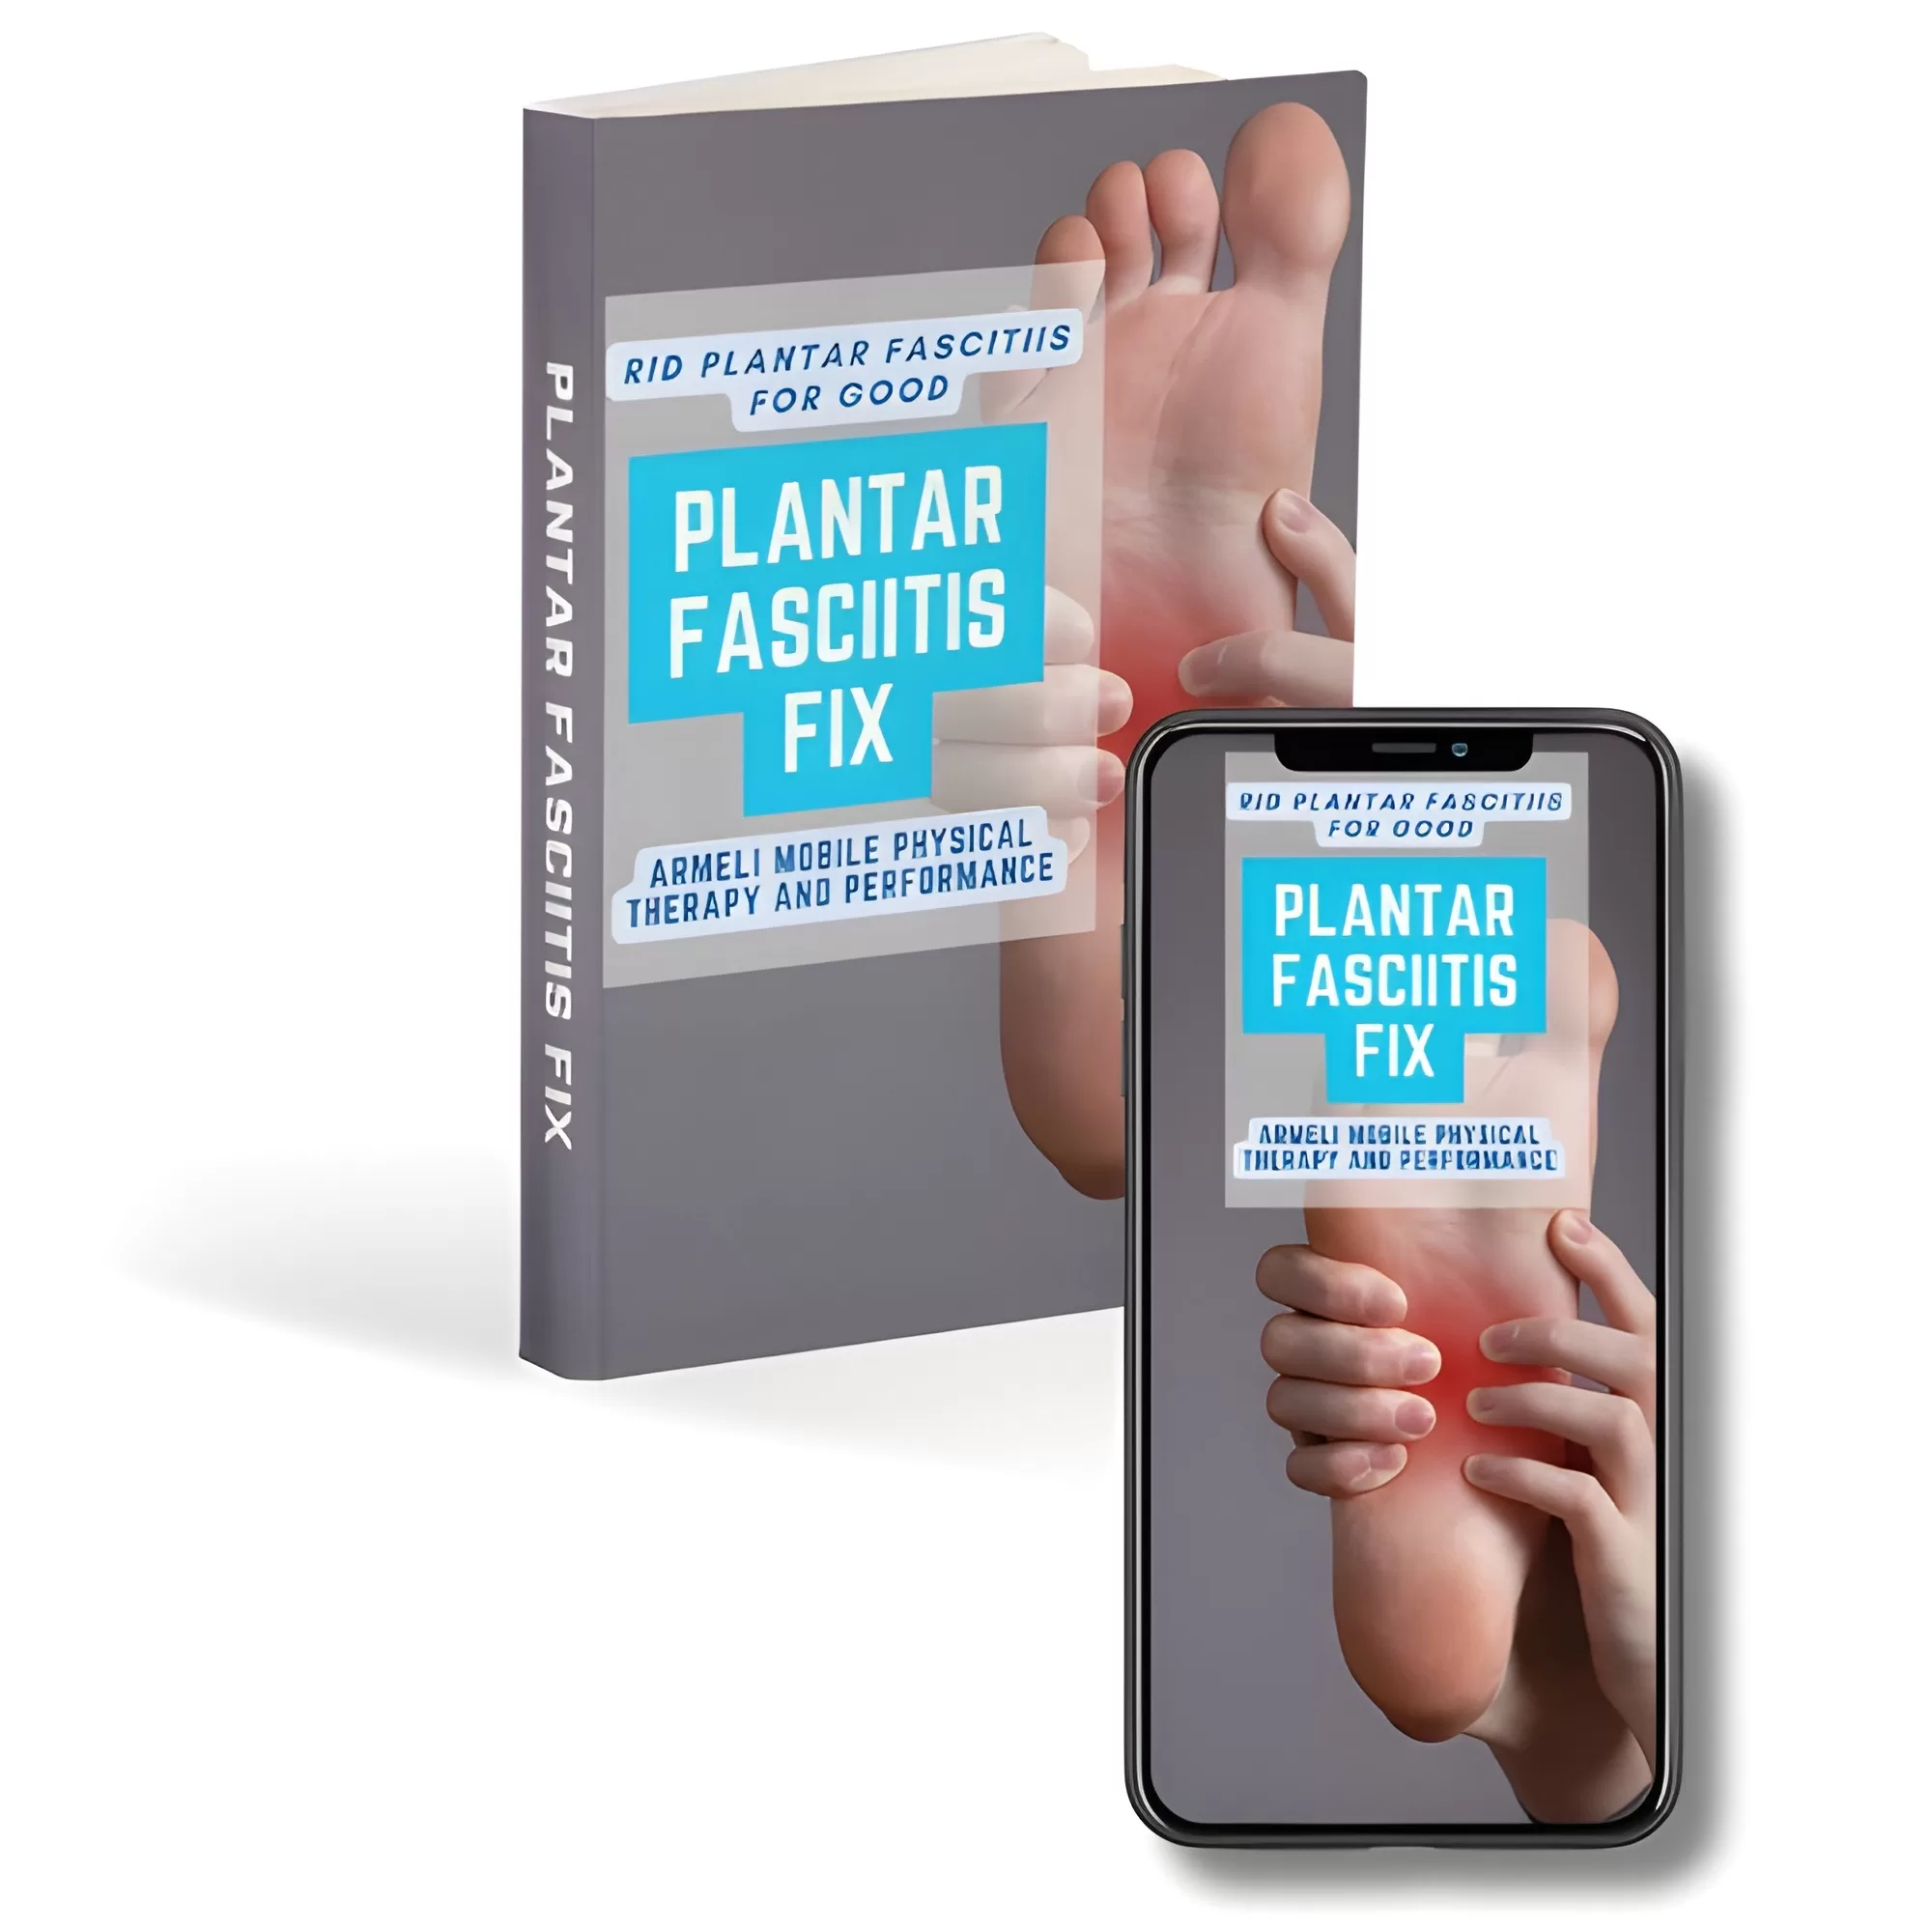 Picture of the plantar fasciitis fix ebook